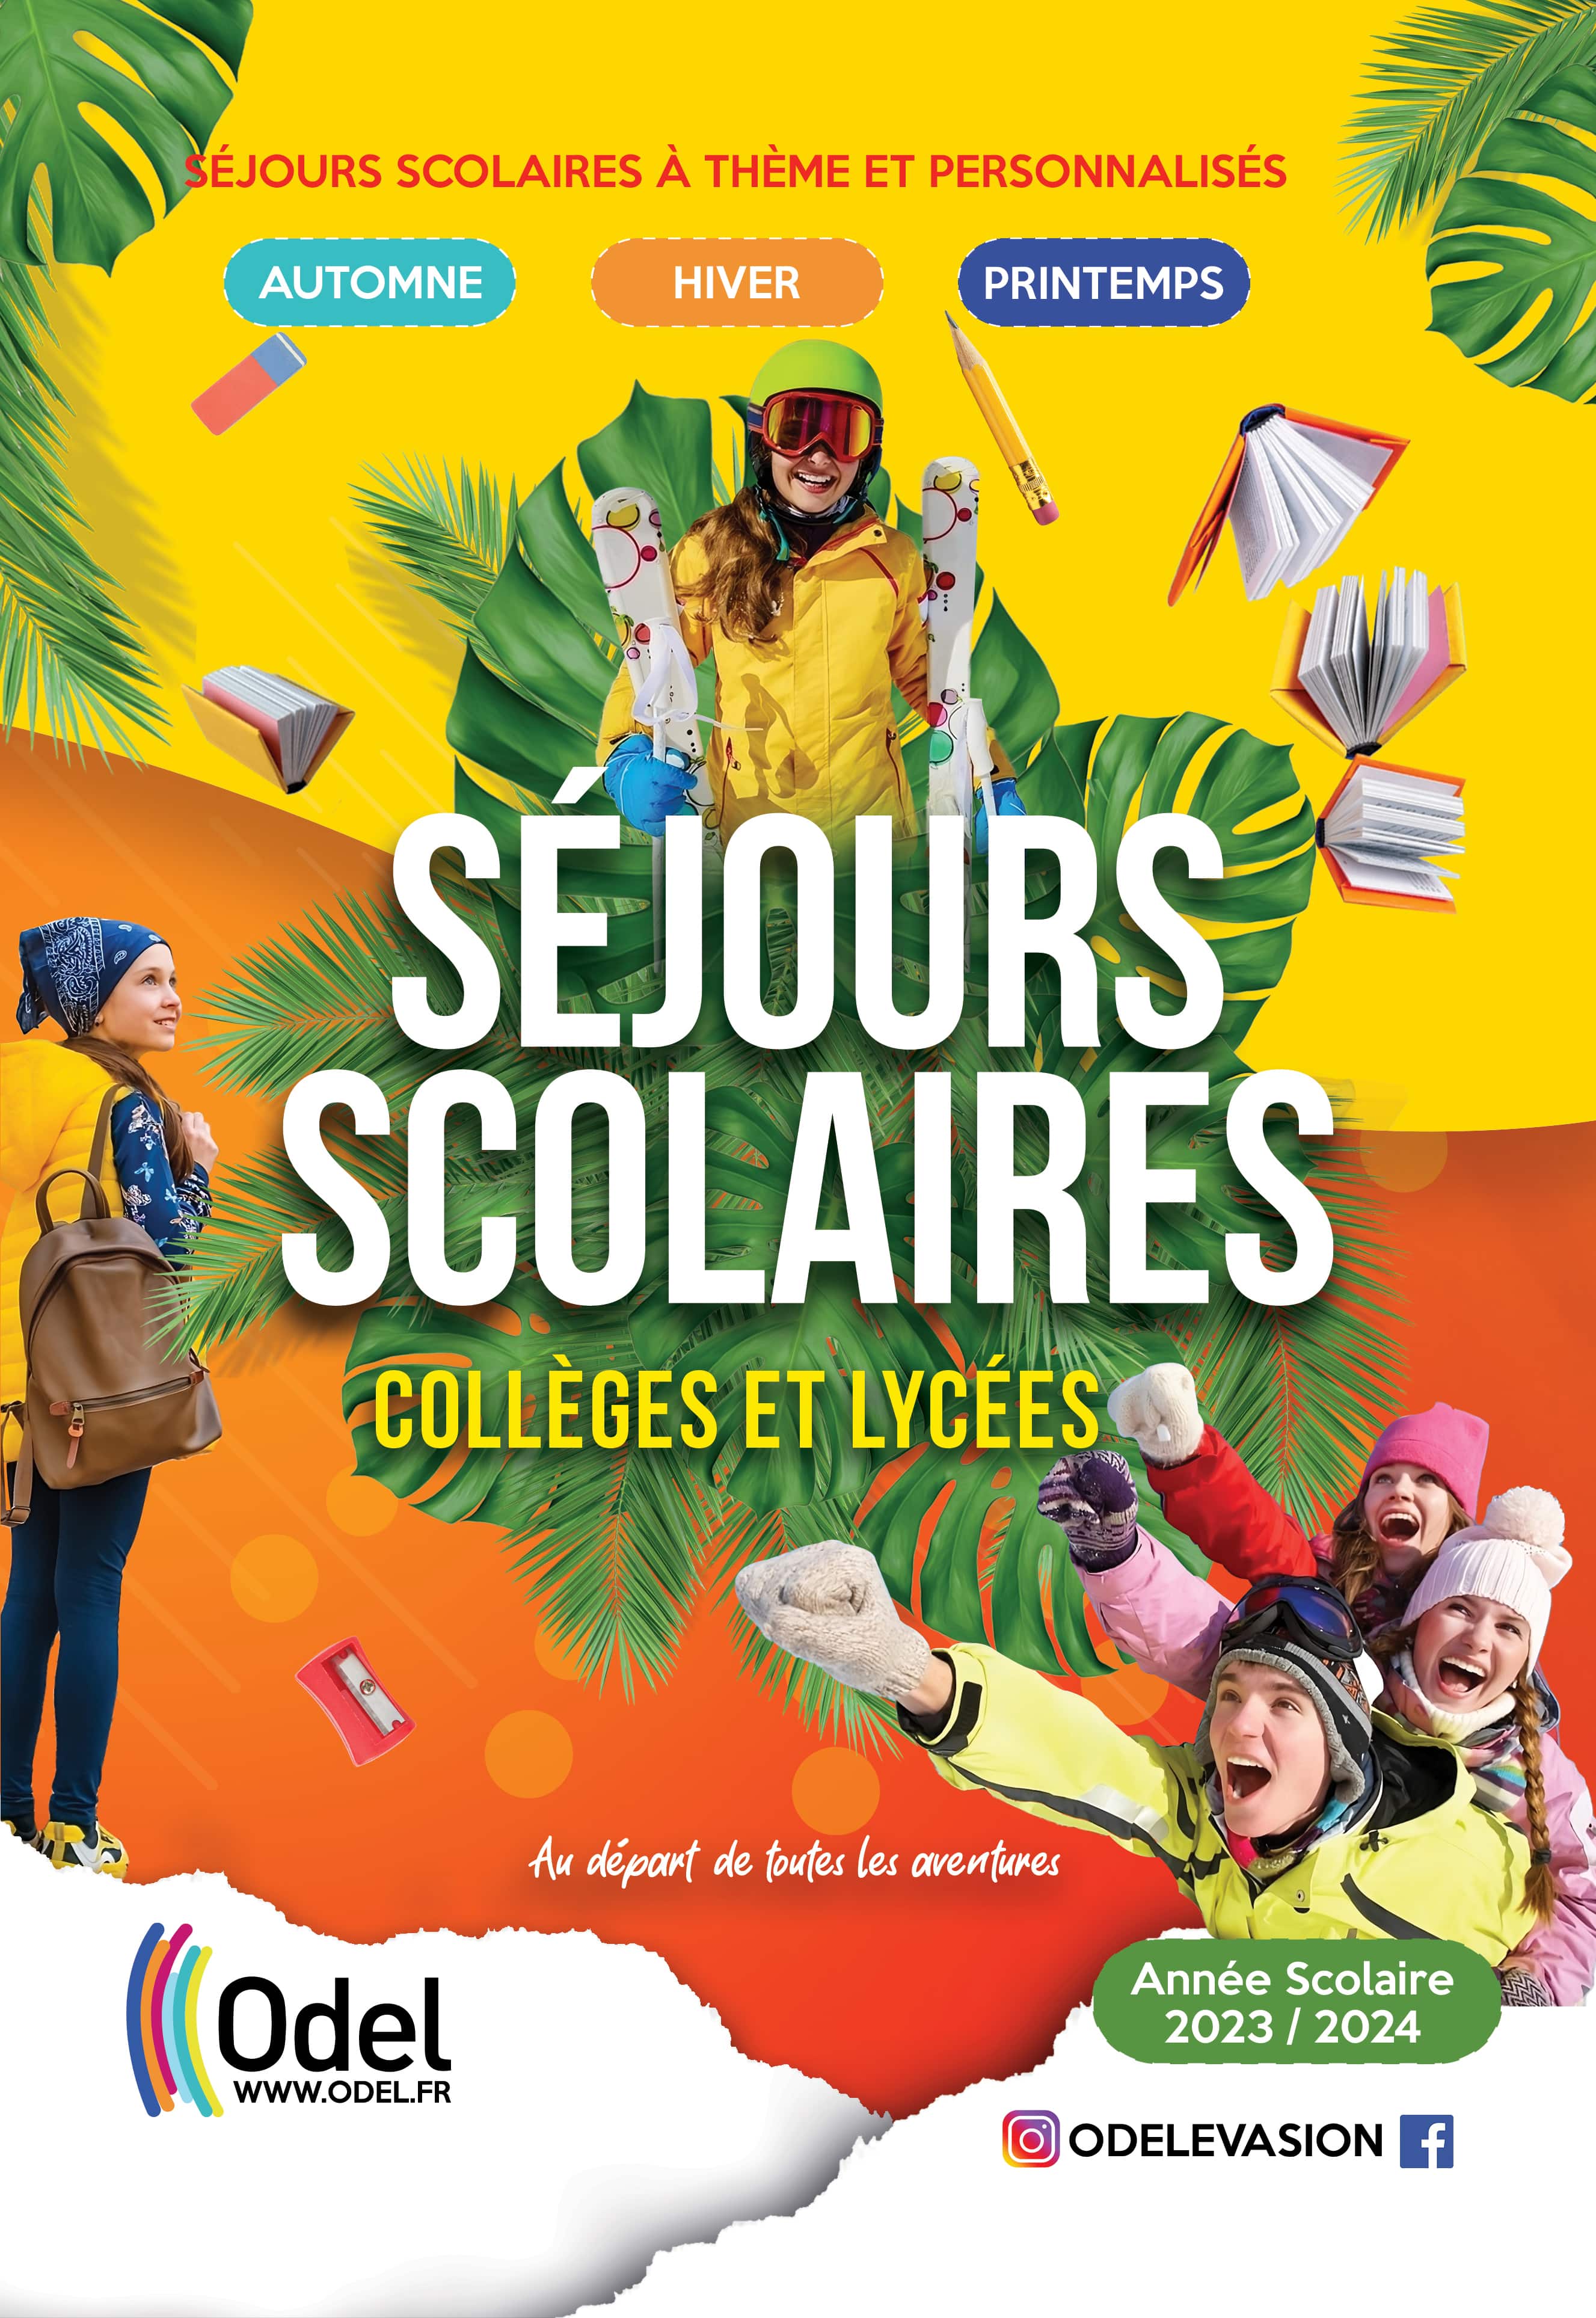 Odel-brochure Séjours scolaires-22-23